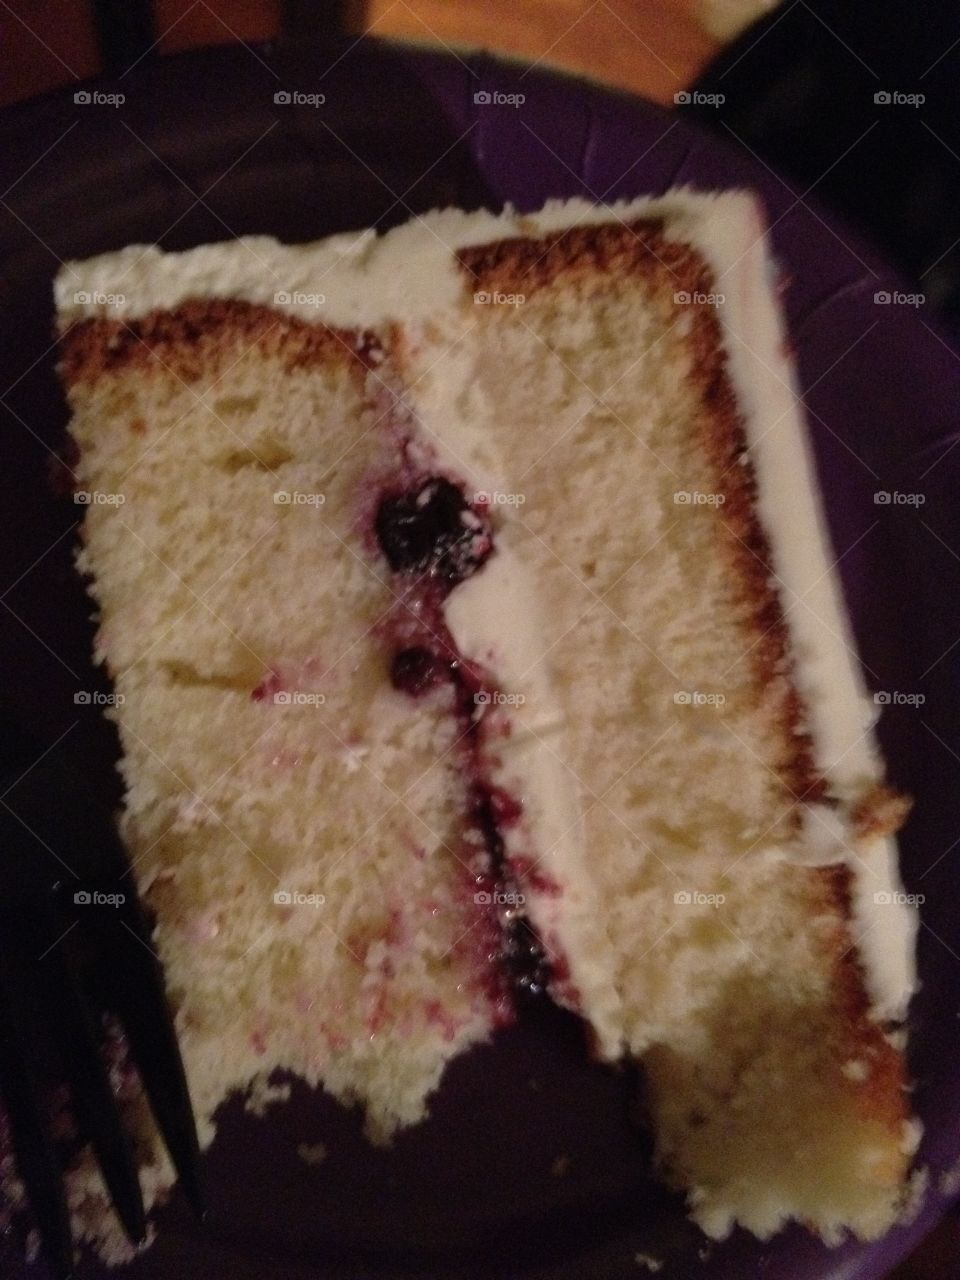 yum! blueberry birthday cake! 